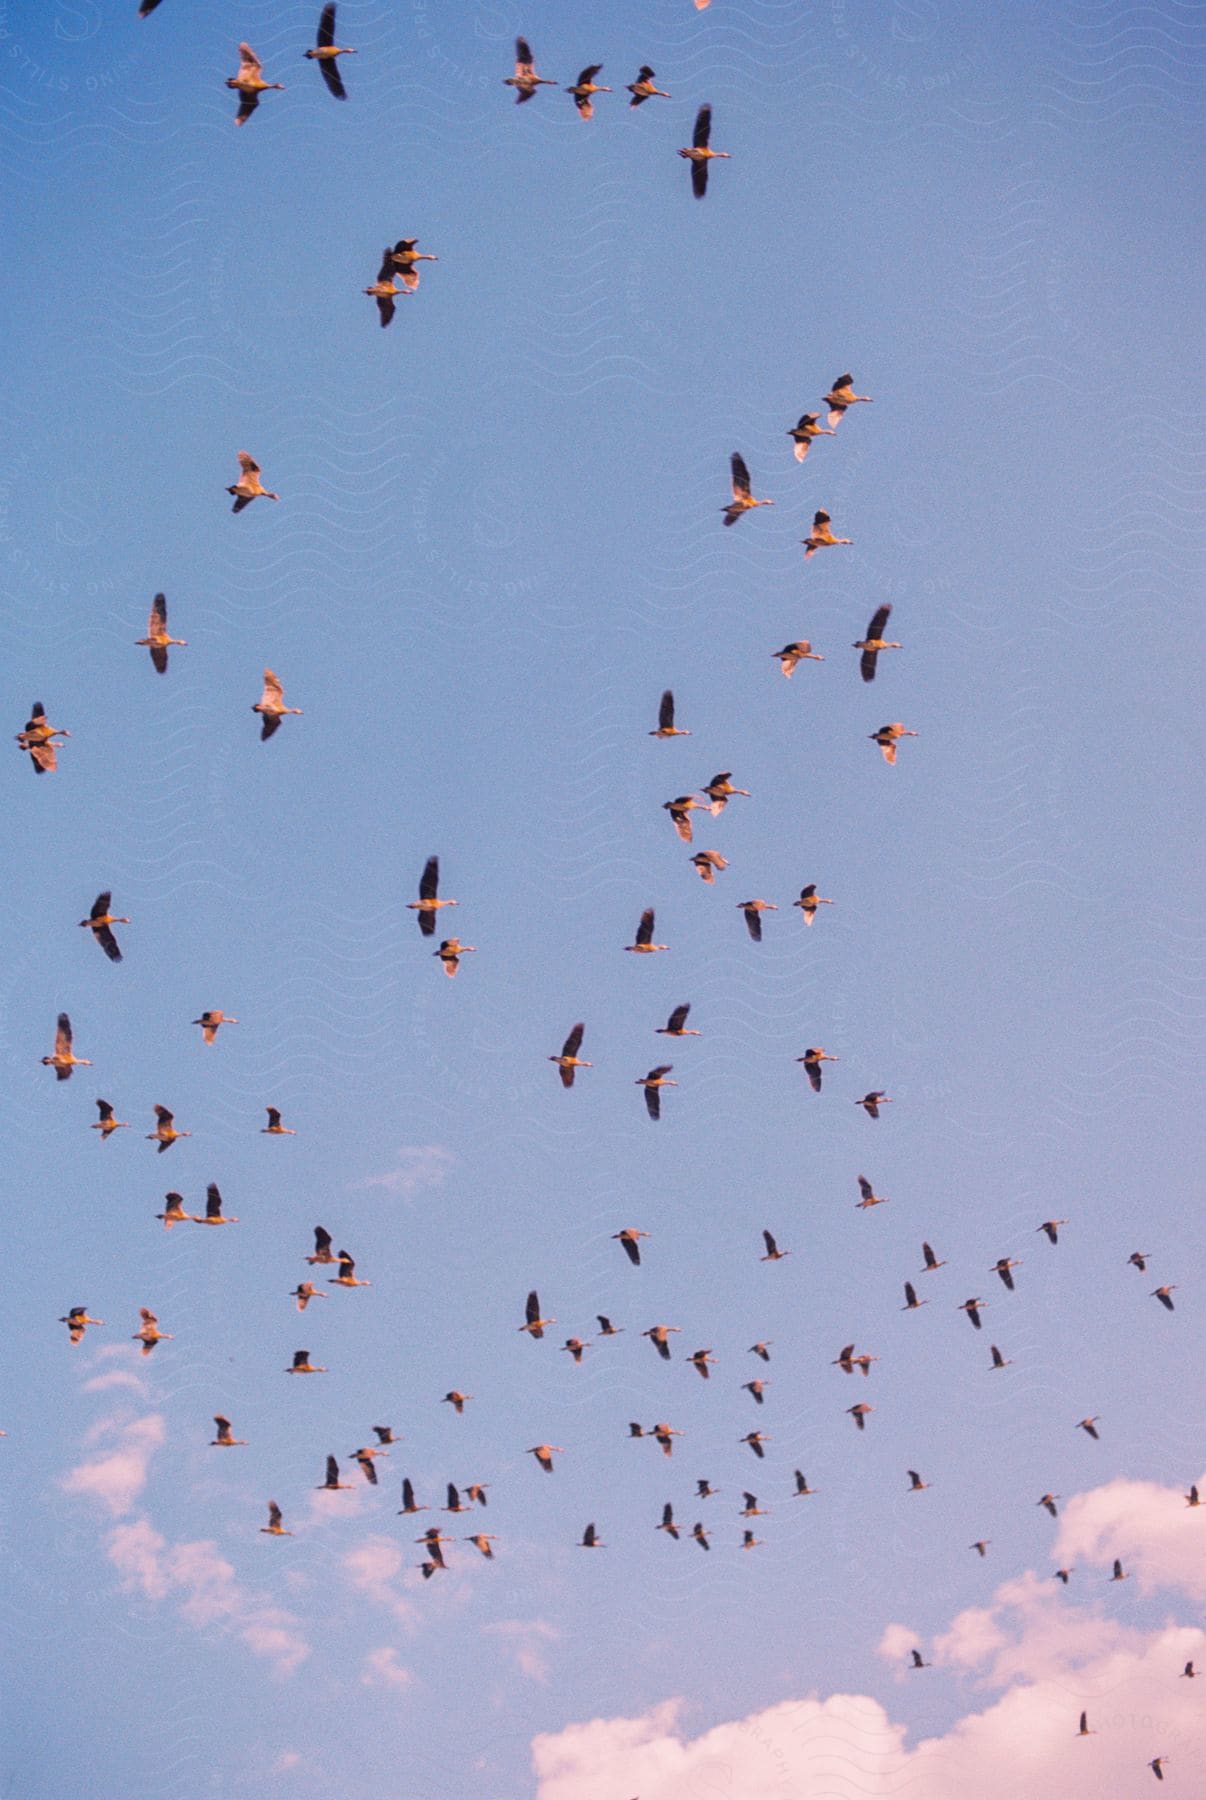 A flock of birds flying across the cloudy sky